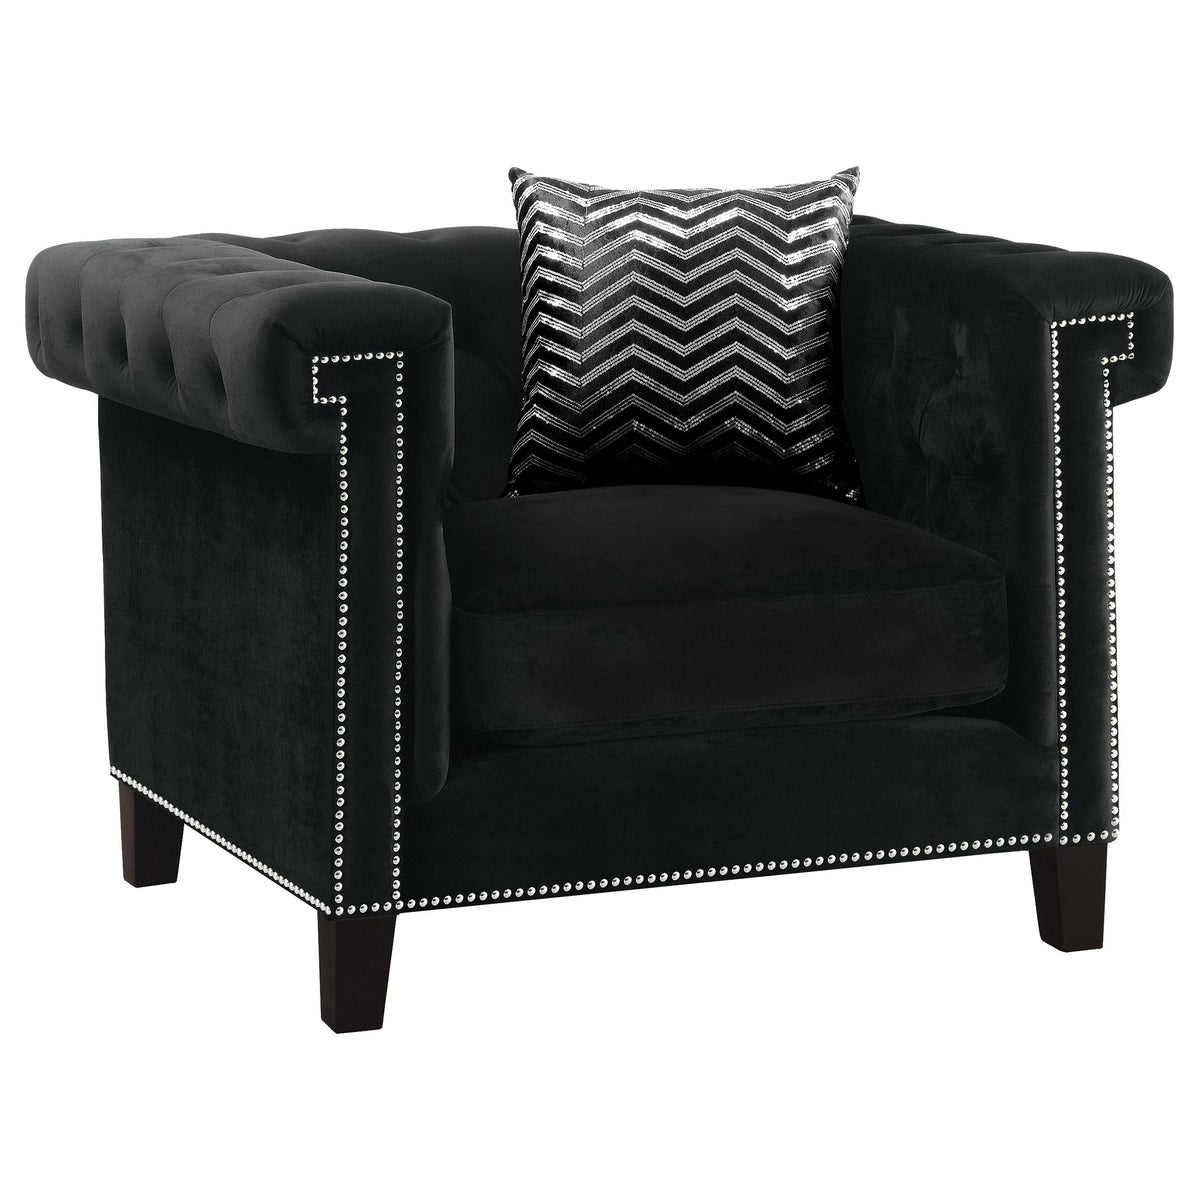 Reventlow Tufted Chair Black Reventlow Tufted Chair Black Half Price Furniture